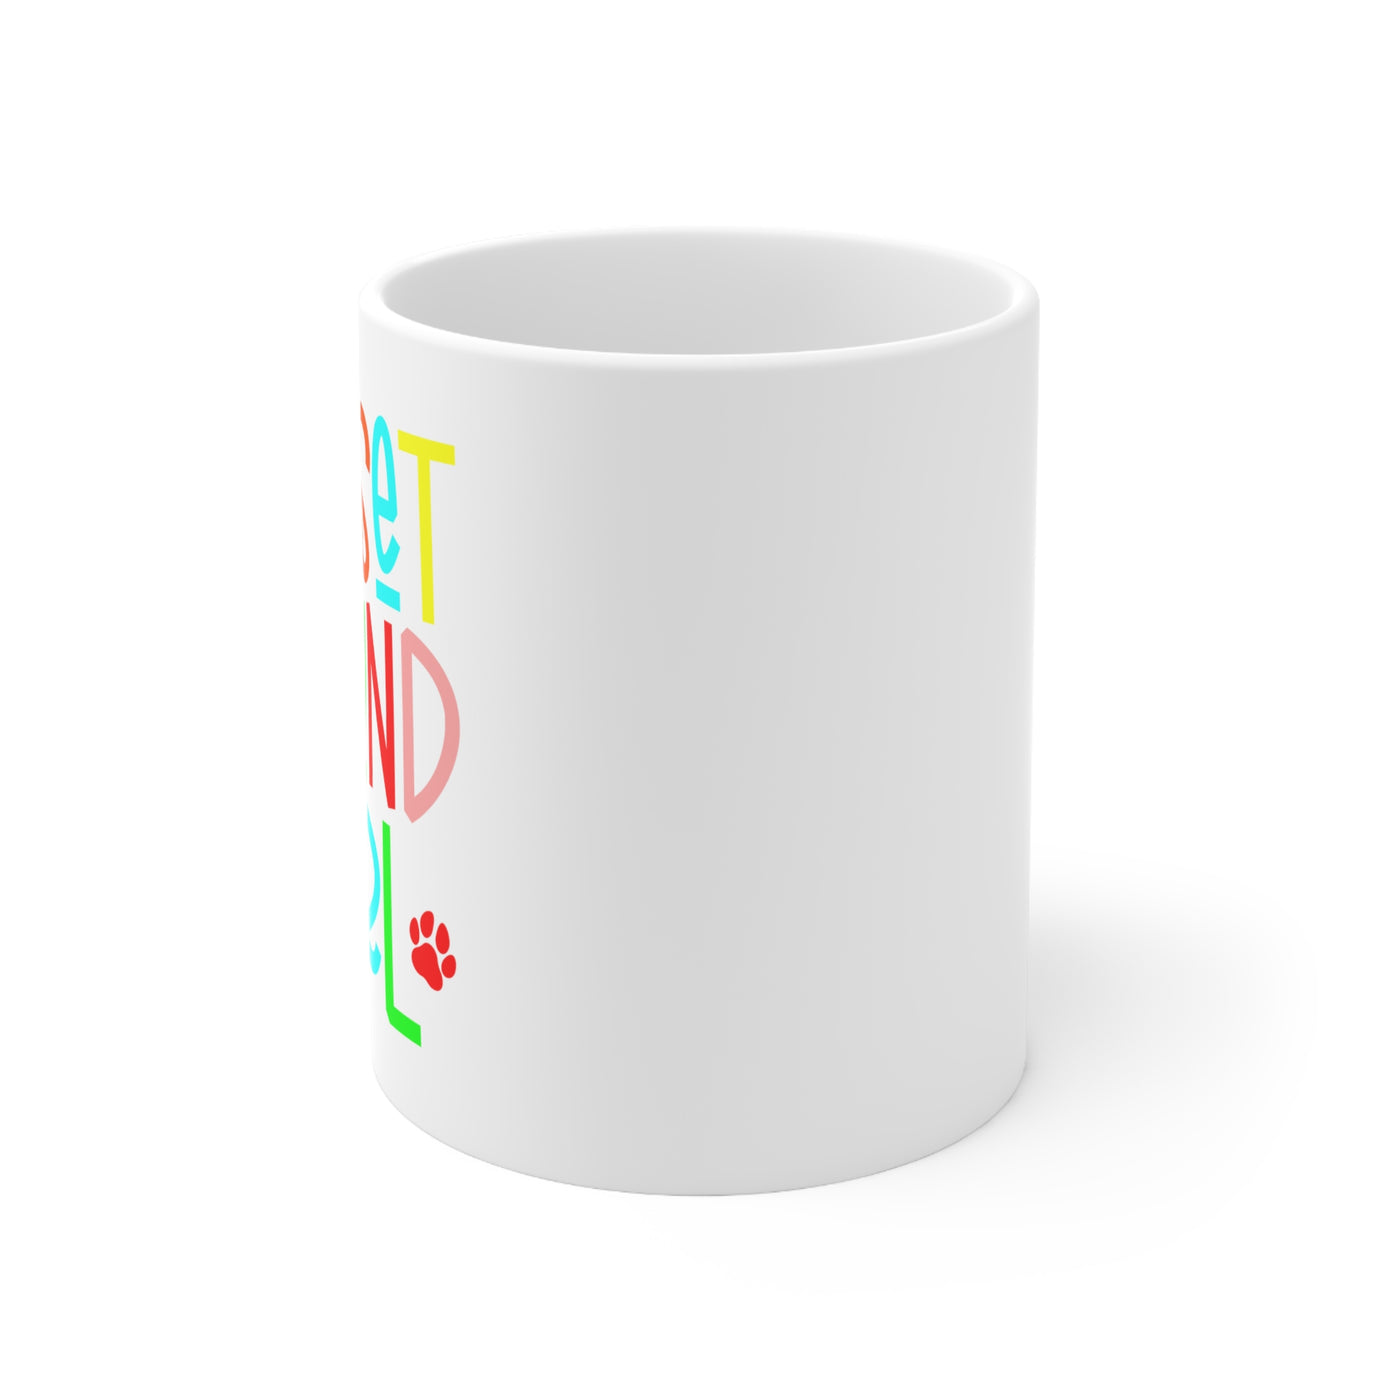 Basset Hound Girl Colored Print Ceramic Mug